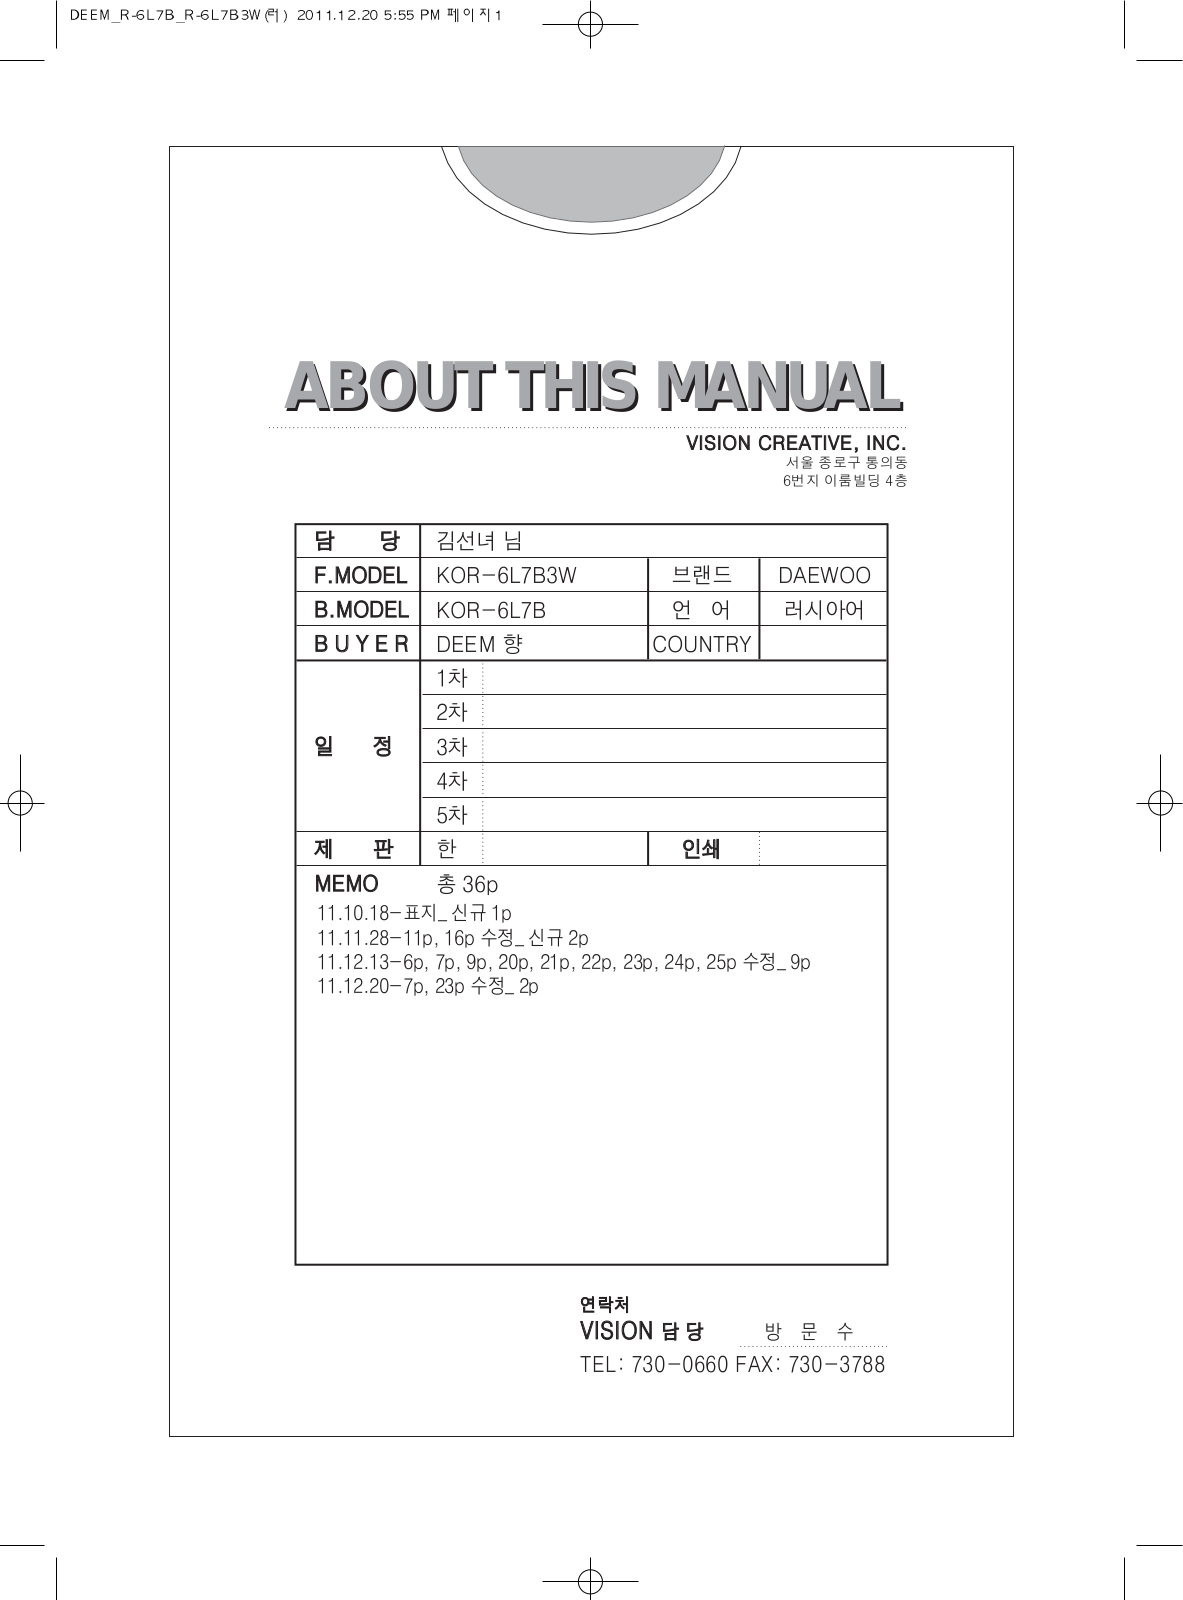 Daewoo KOR-6L7B User Manual